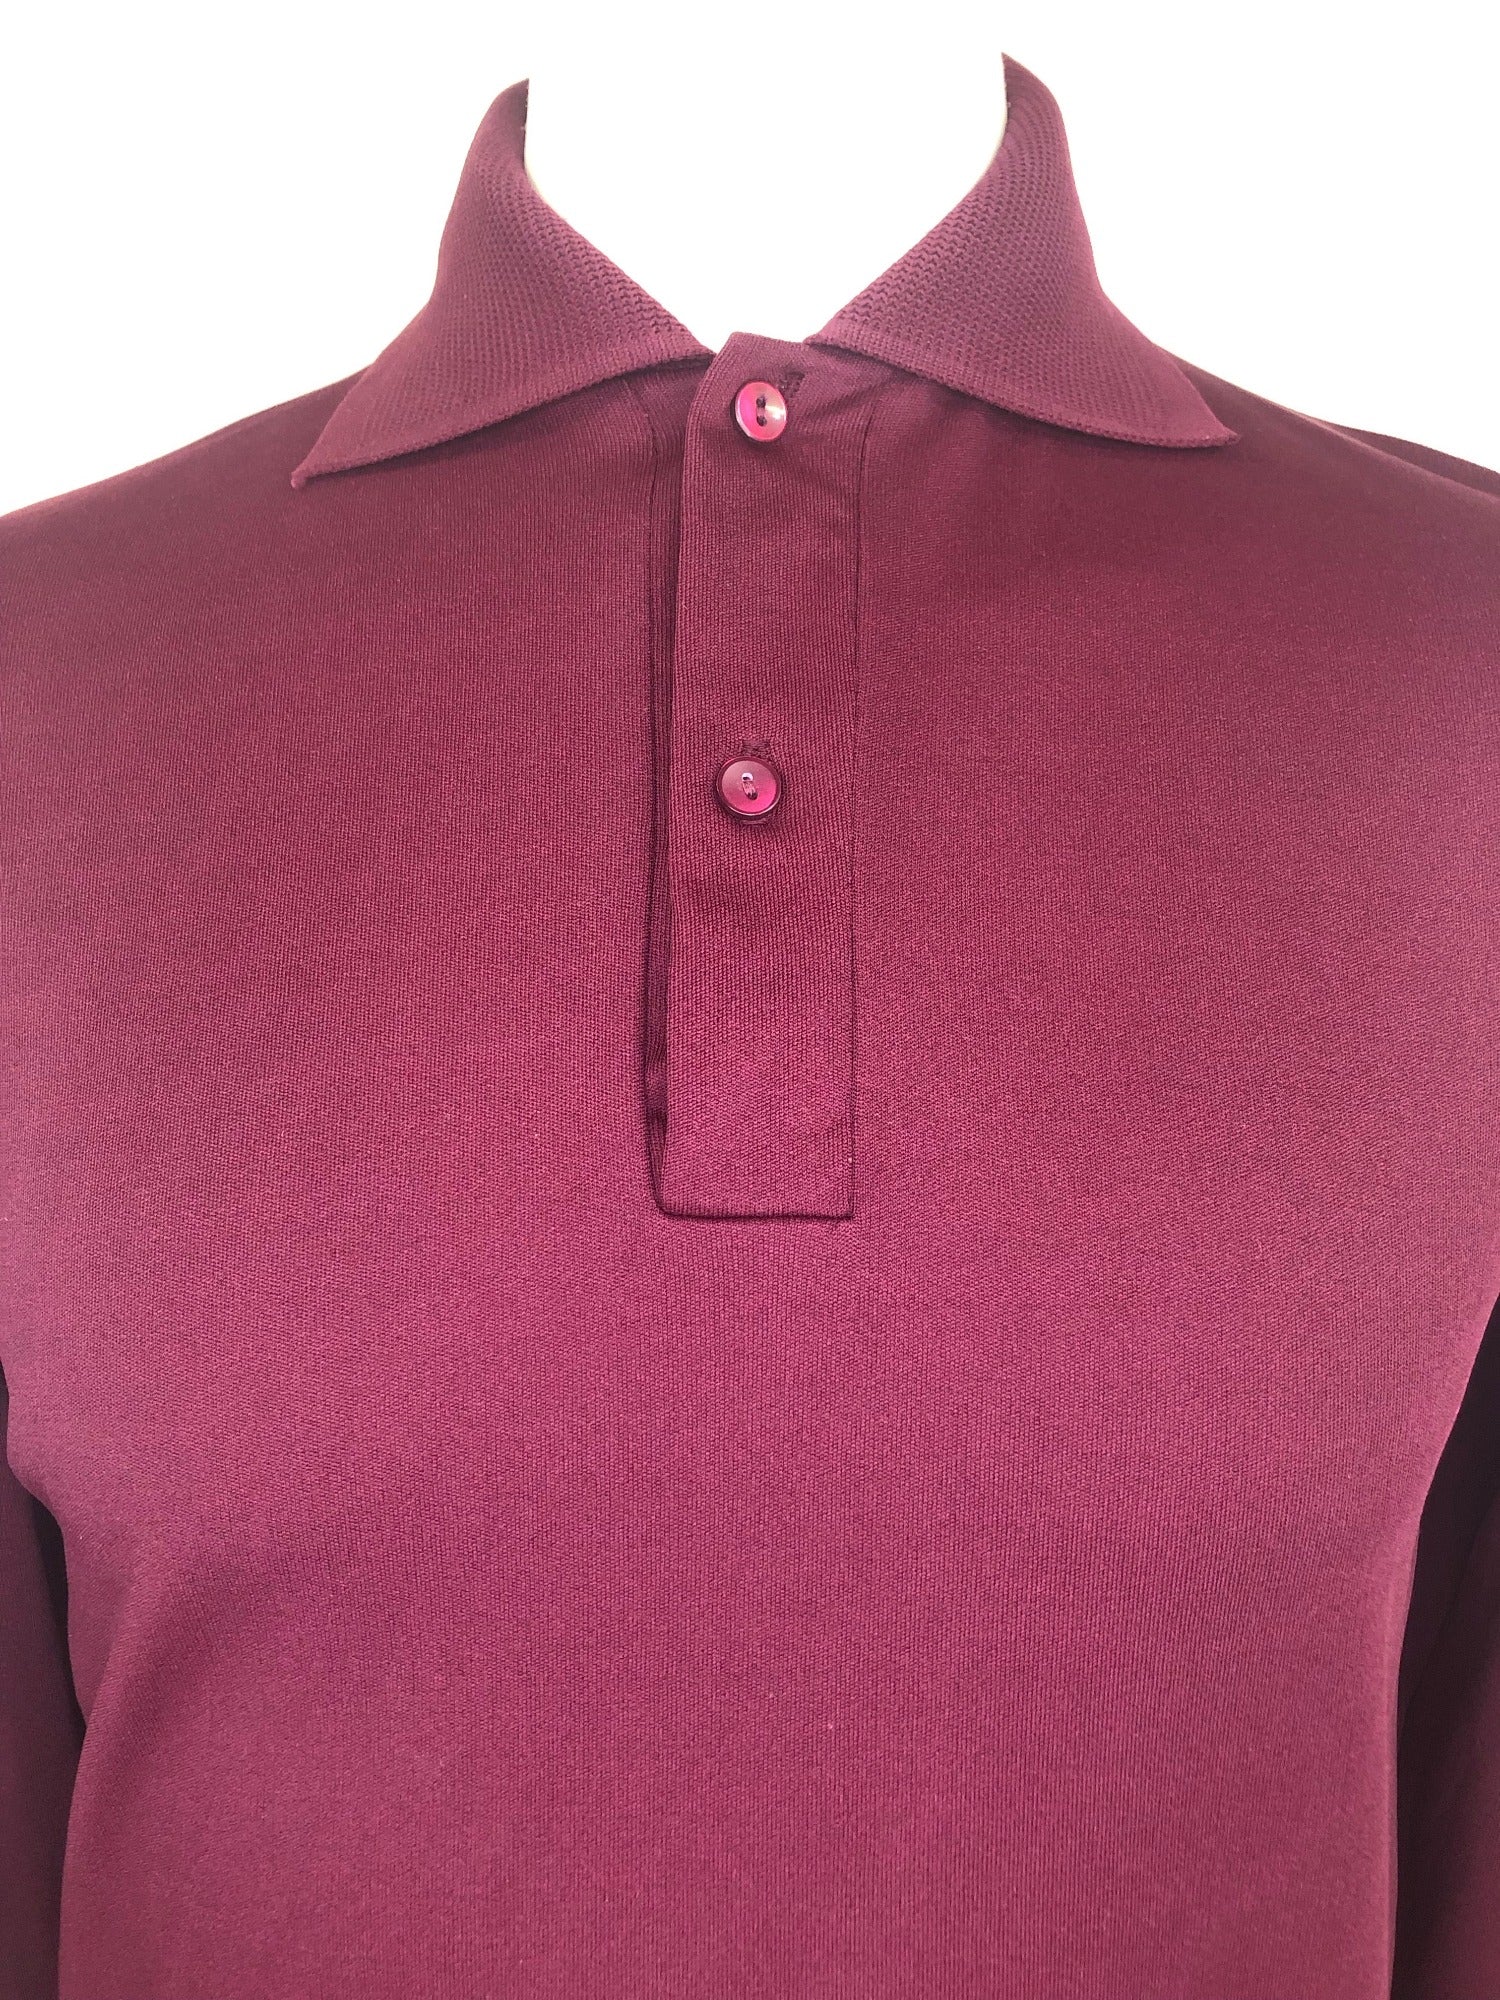 vintage  red  New old stock  MOD  mens  Long sleeved top  light knit  L  Jonelle  burgundy  Berketex  60s  1960s